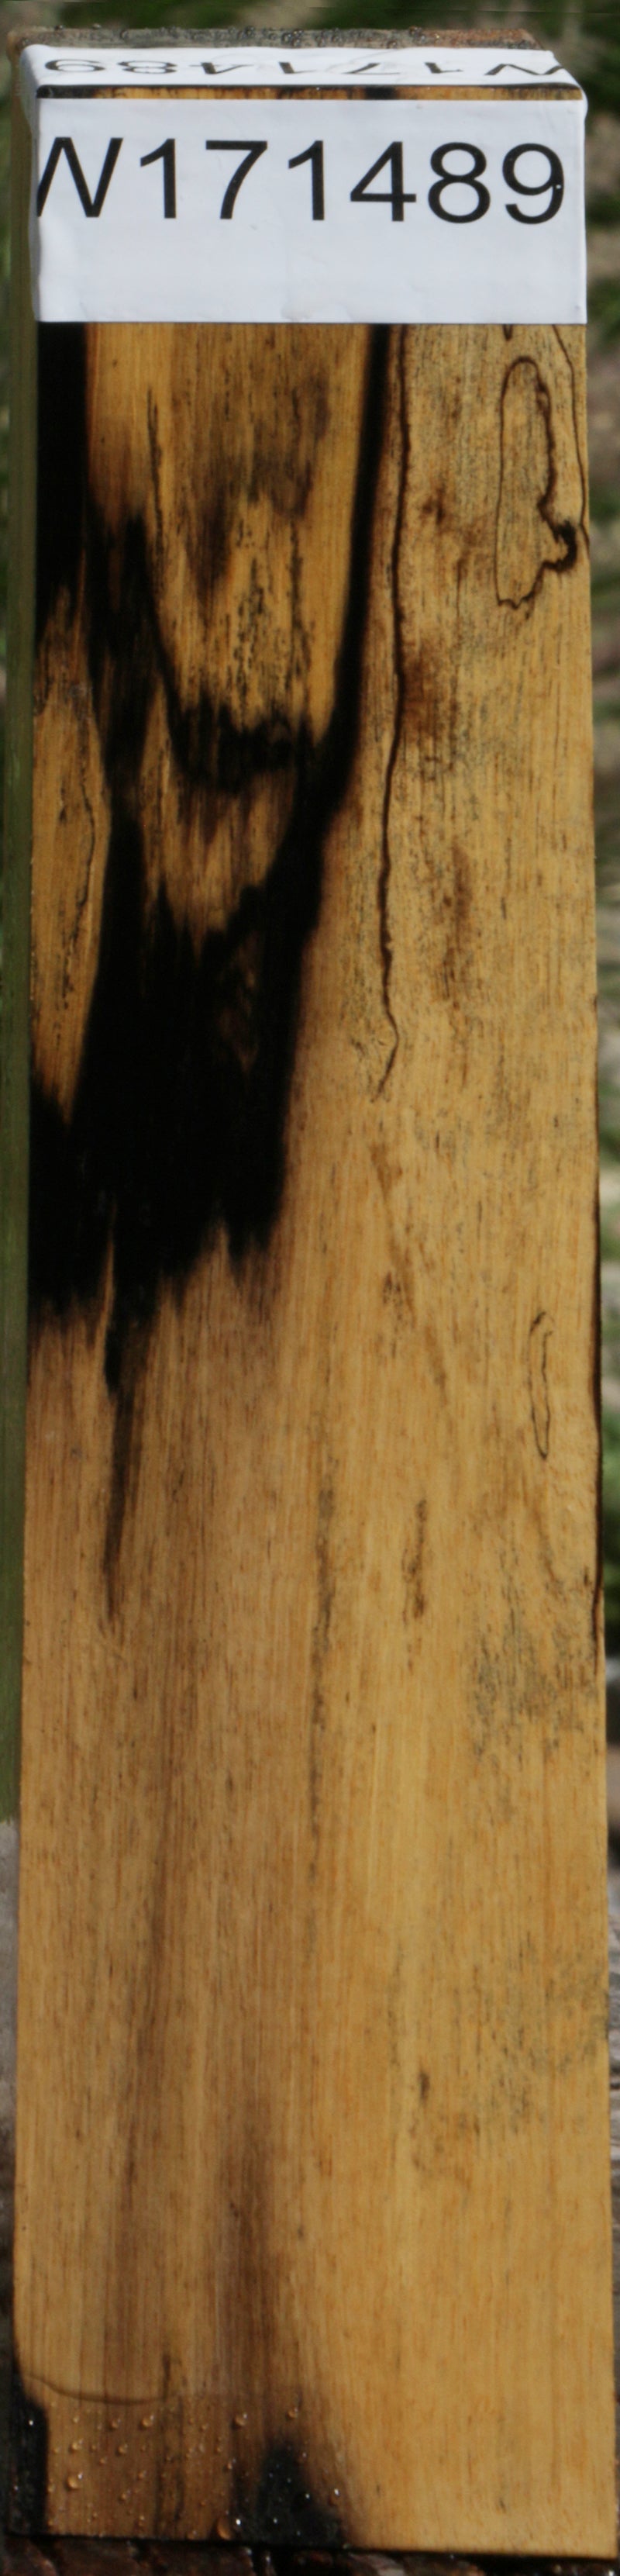 Spalted Black and White Ebony Lumber